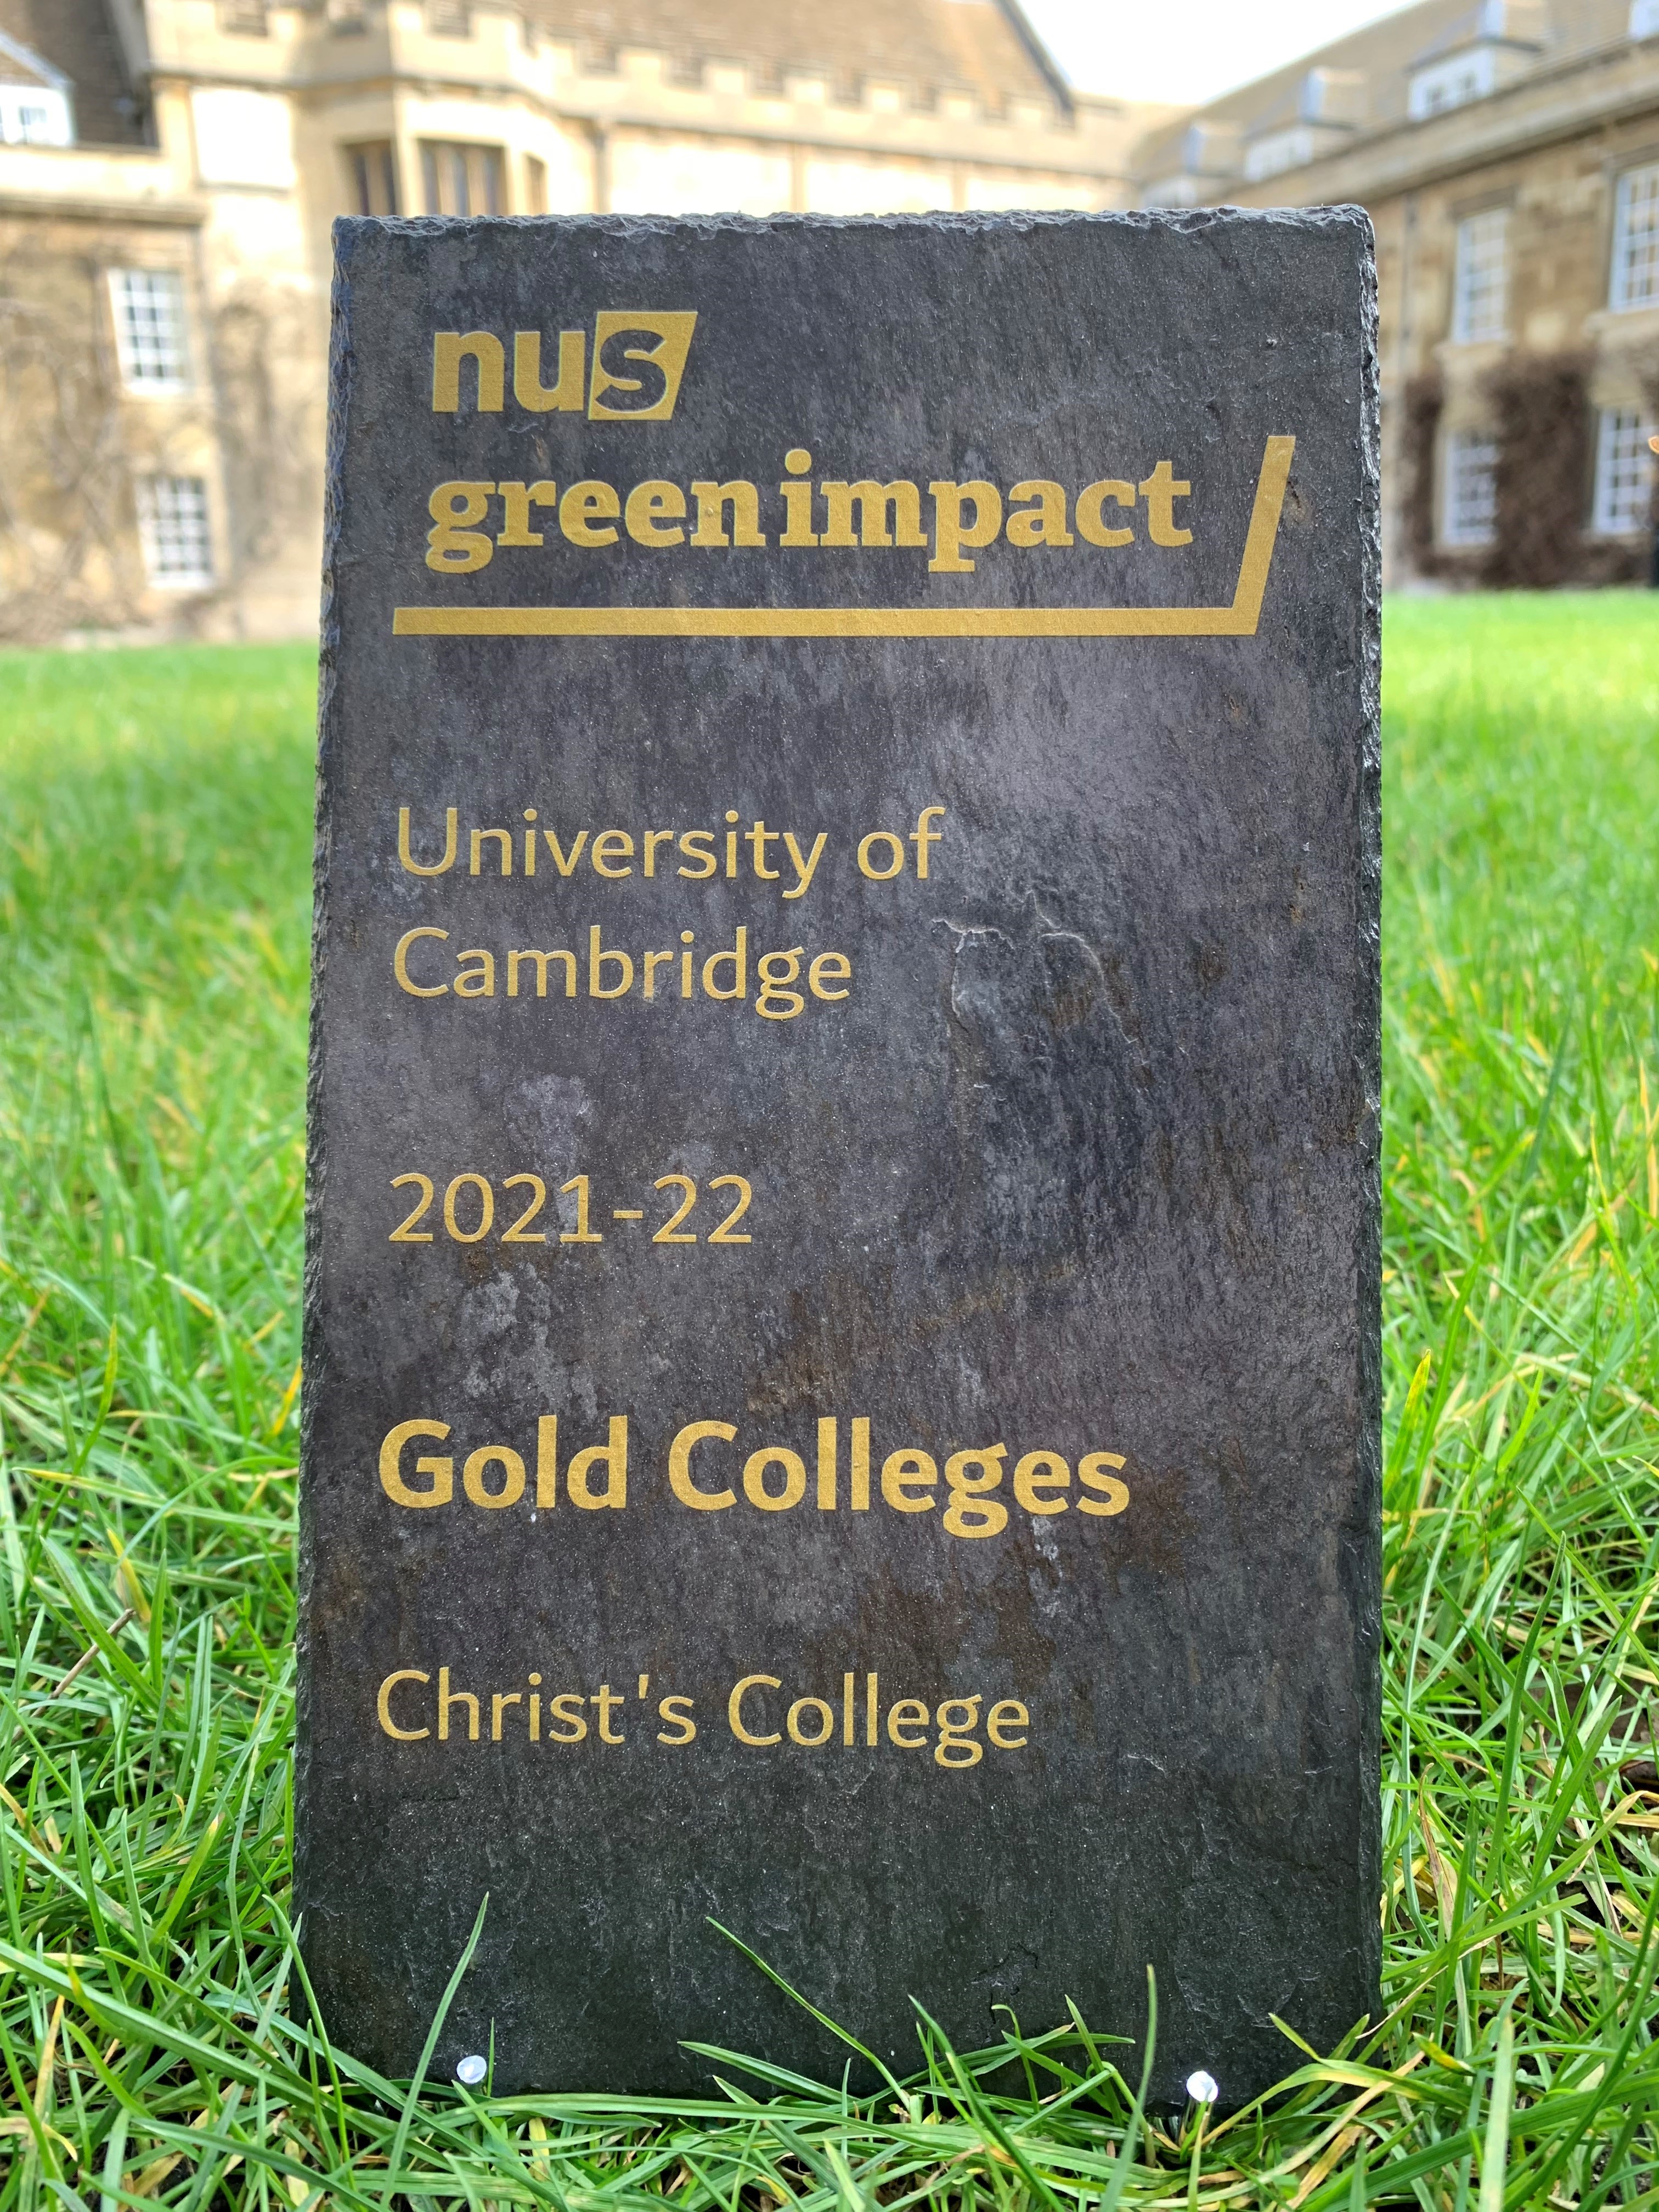 Green Impact Award